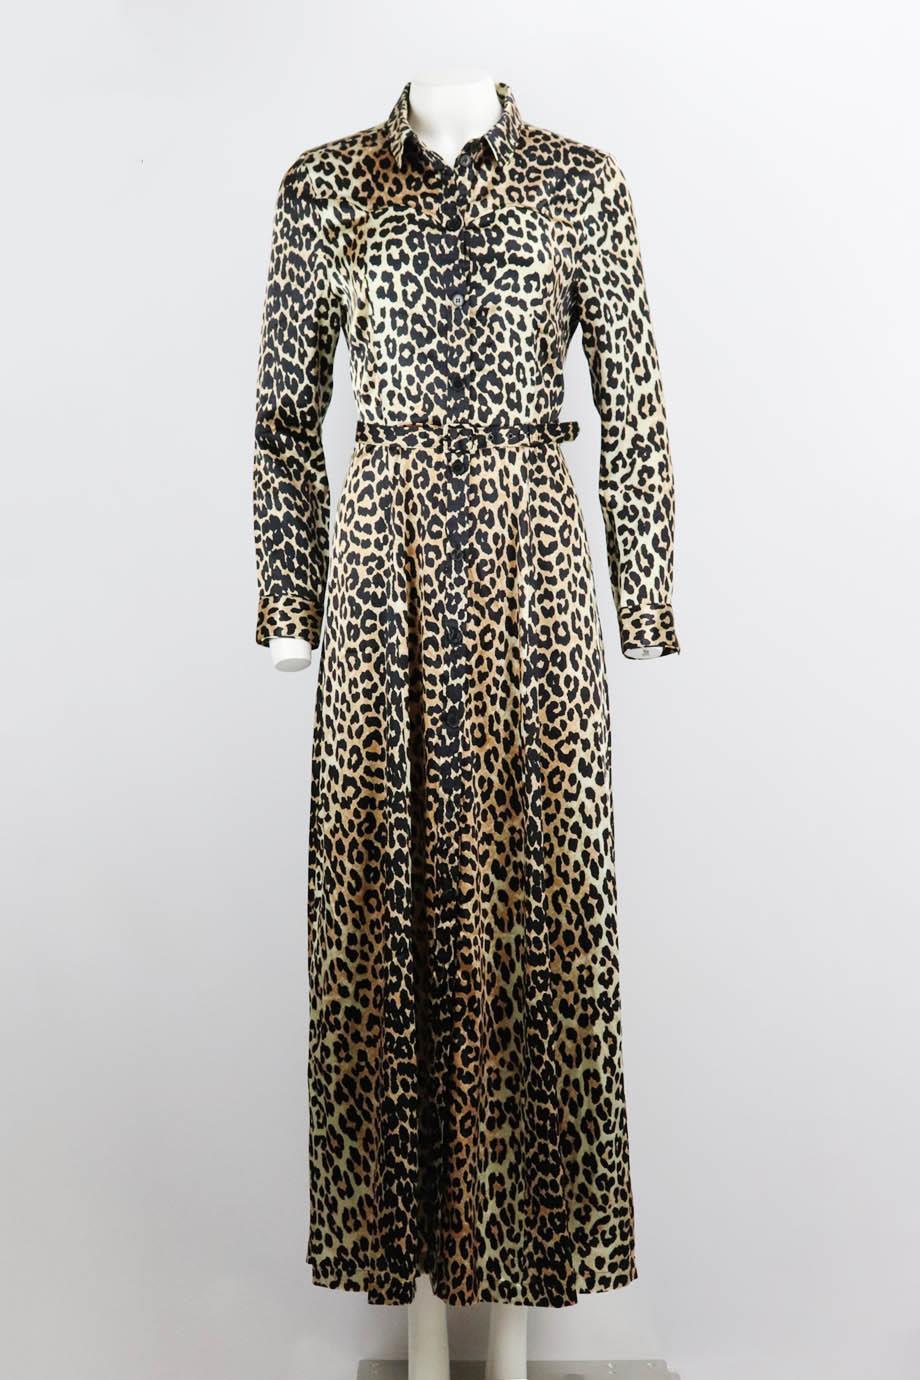 Ganni belted leopard print silk satin maxi dress. Brown, beige and black. Long sleeve, v-neck. Button fastening at front. 92% Silk, 8% elastane. Size: DE 40 (UK 14, US 10, FR 42, IT 46). Bust: 36 in. Waist: 31 in. Hips: 42 in. Length: 58 in
